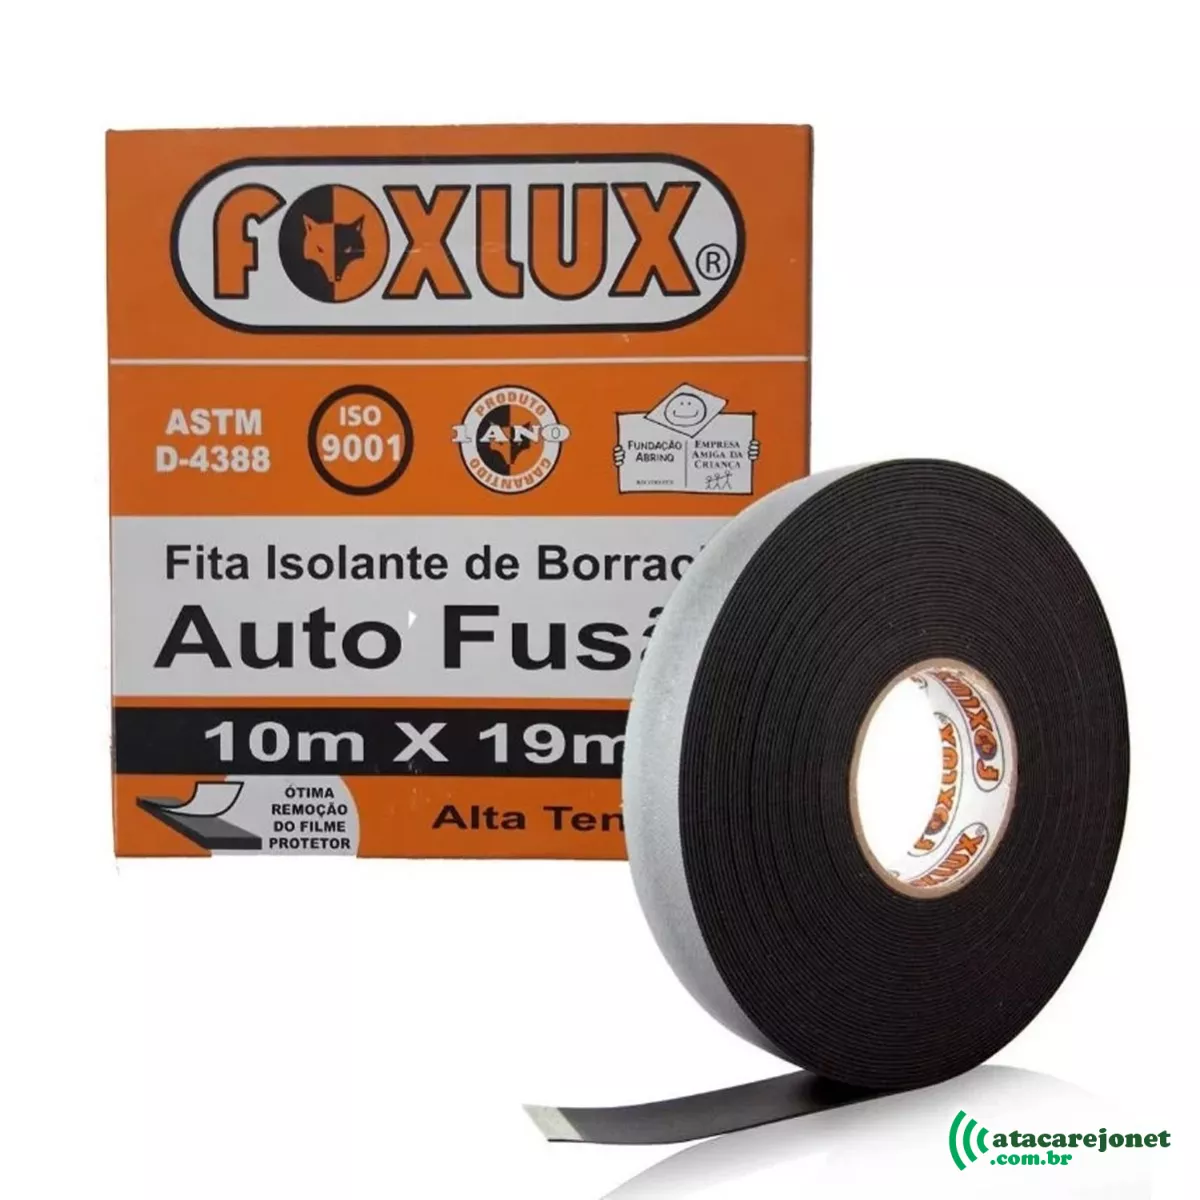 Fita Isolante Autofusão Preta 19mm x 10m - Foxlux